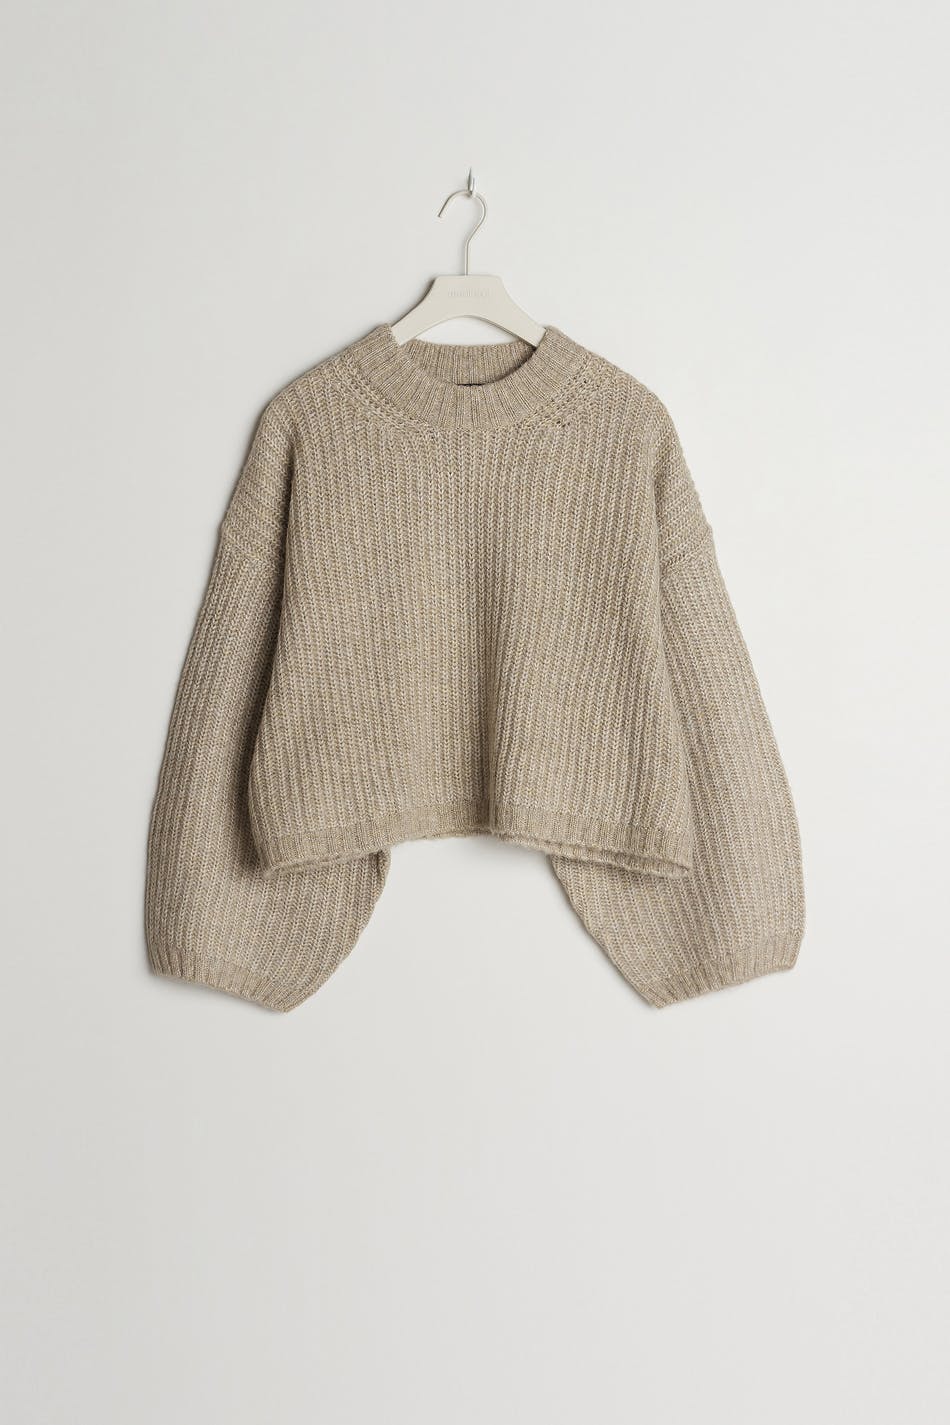 Lana petite knitted sweater